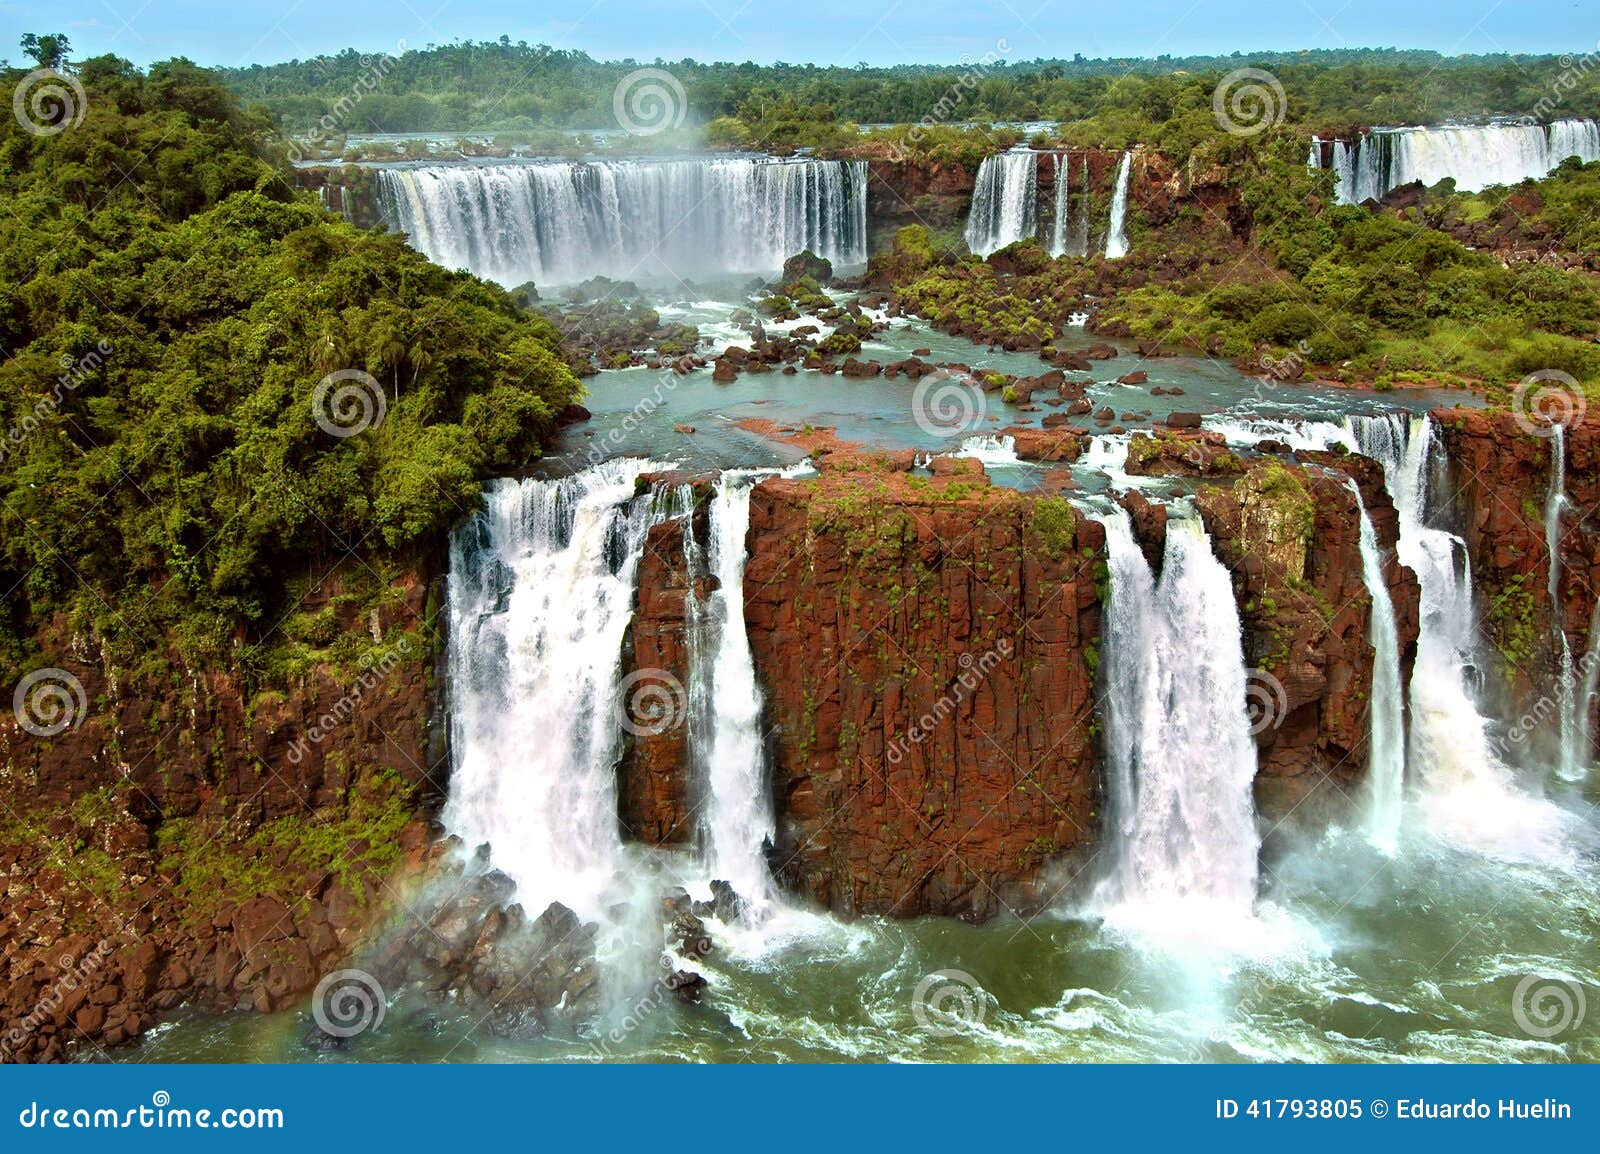 iguazu waterfalls (argentina and brazil)